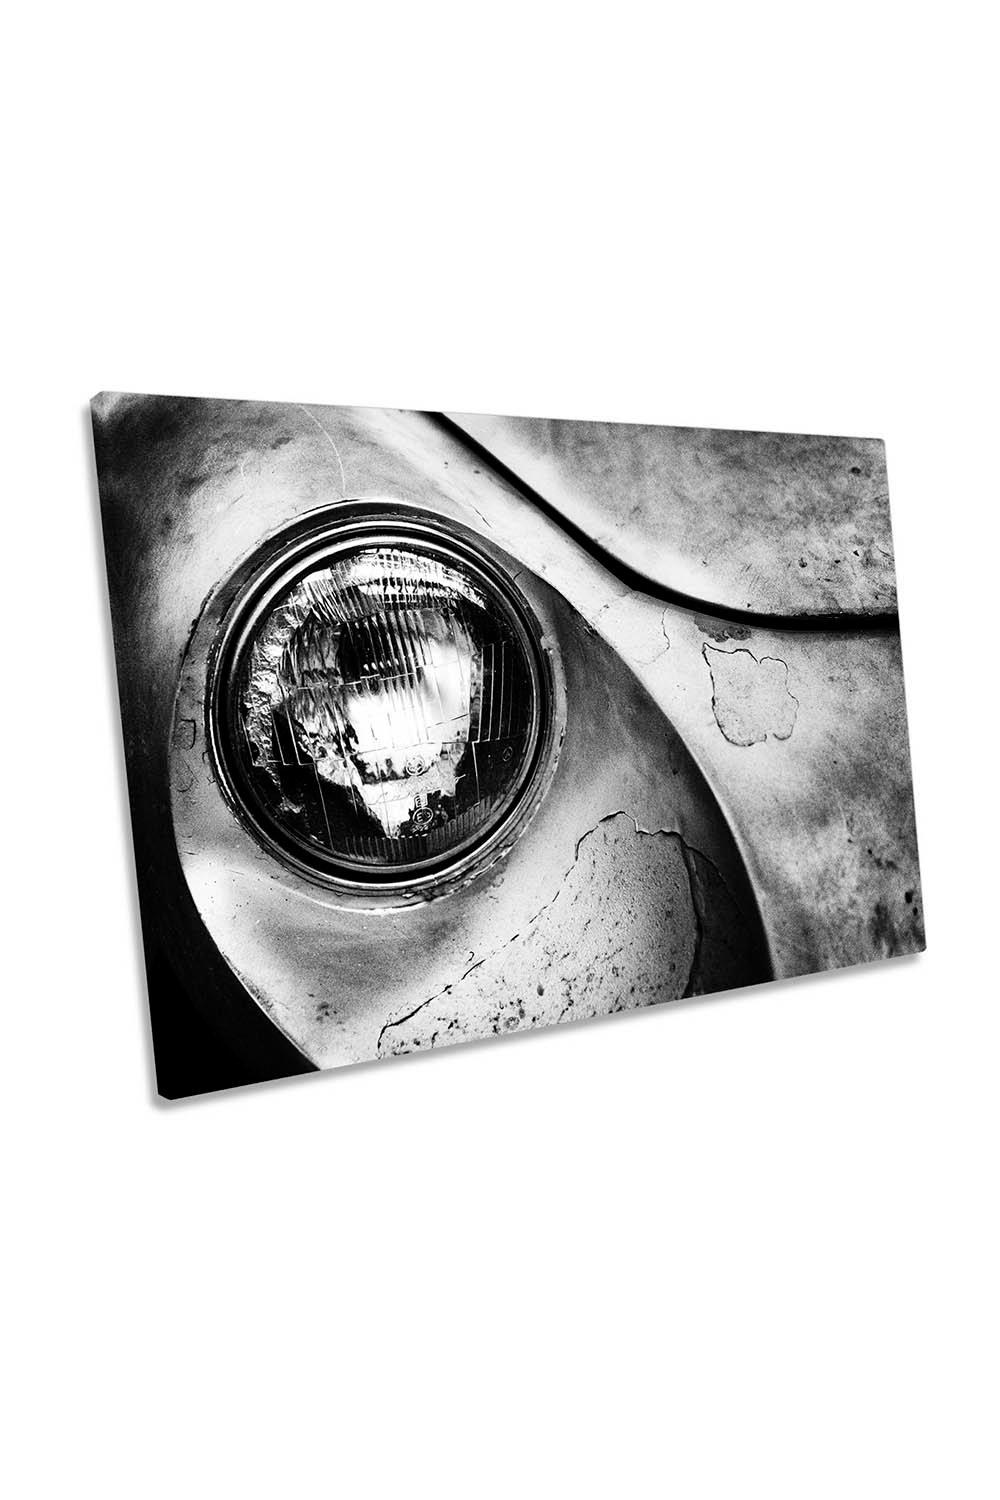 Dead Alfa Car Headlight Canvas Wall Art Picture Print